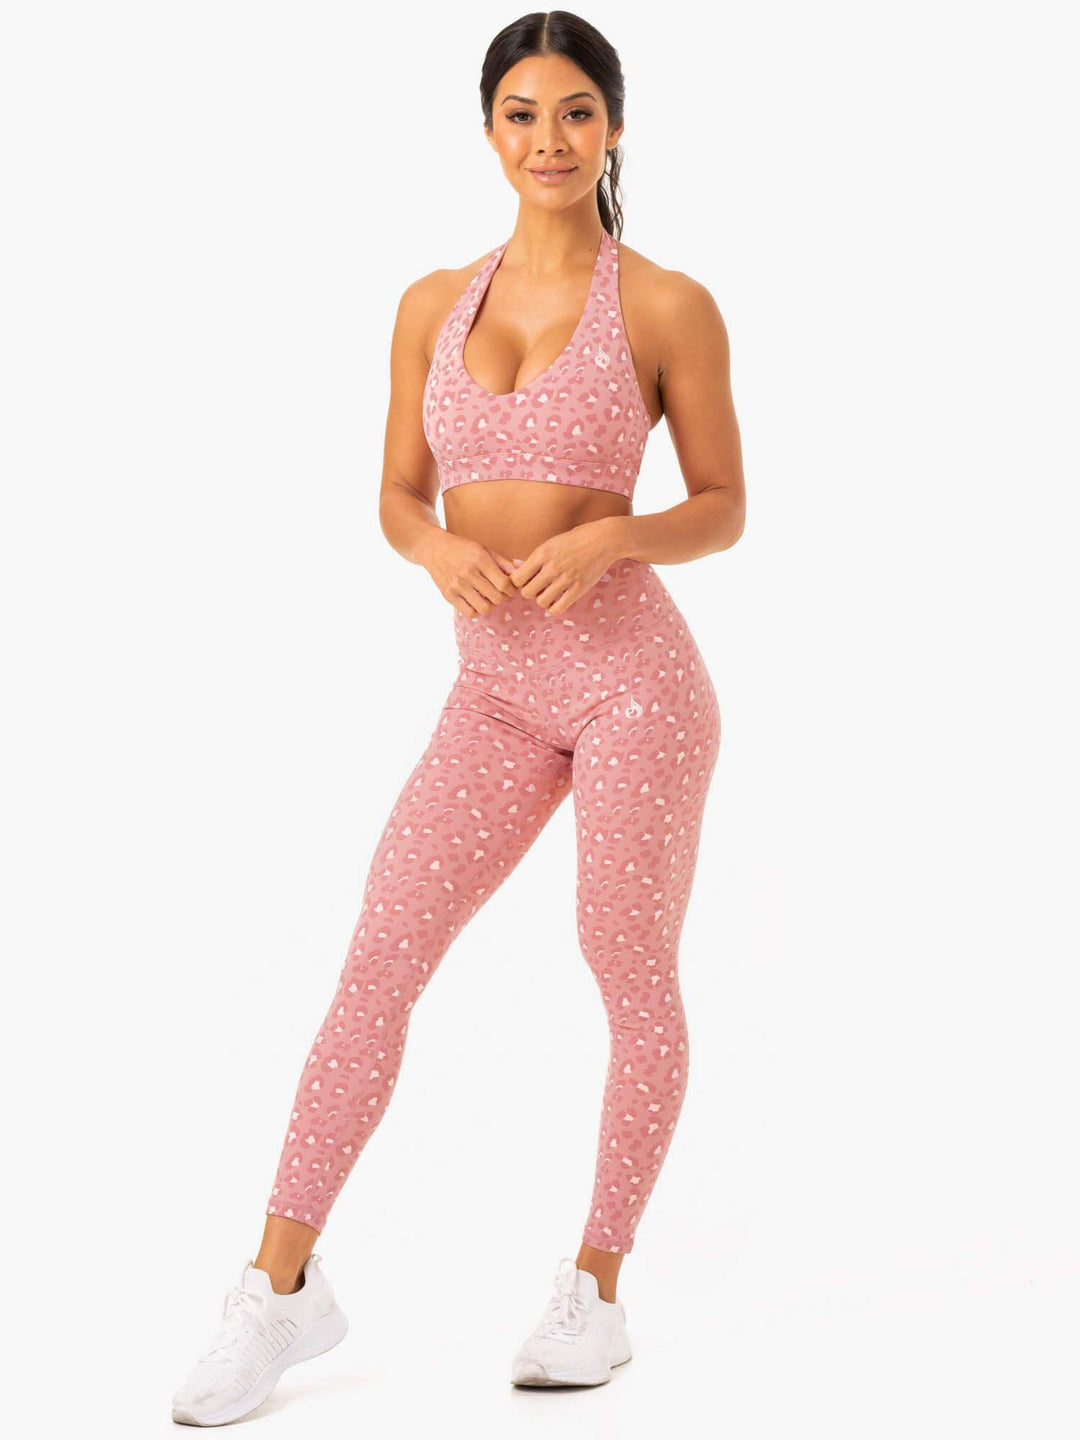 Hybrid Full Length Leggings - Pink Leopard Clothing Ryderwear 